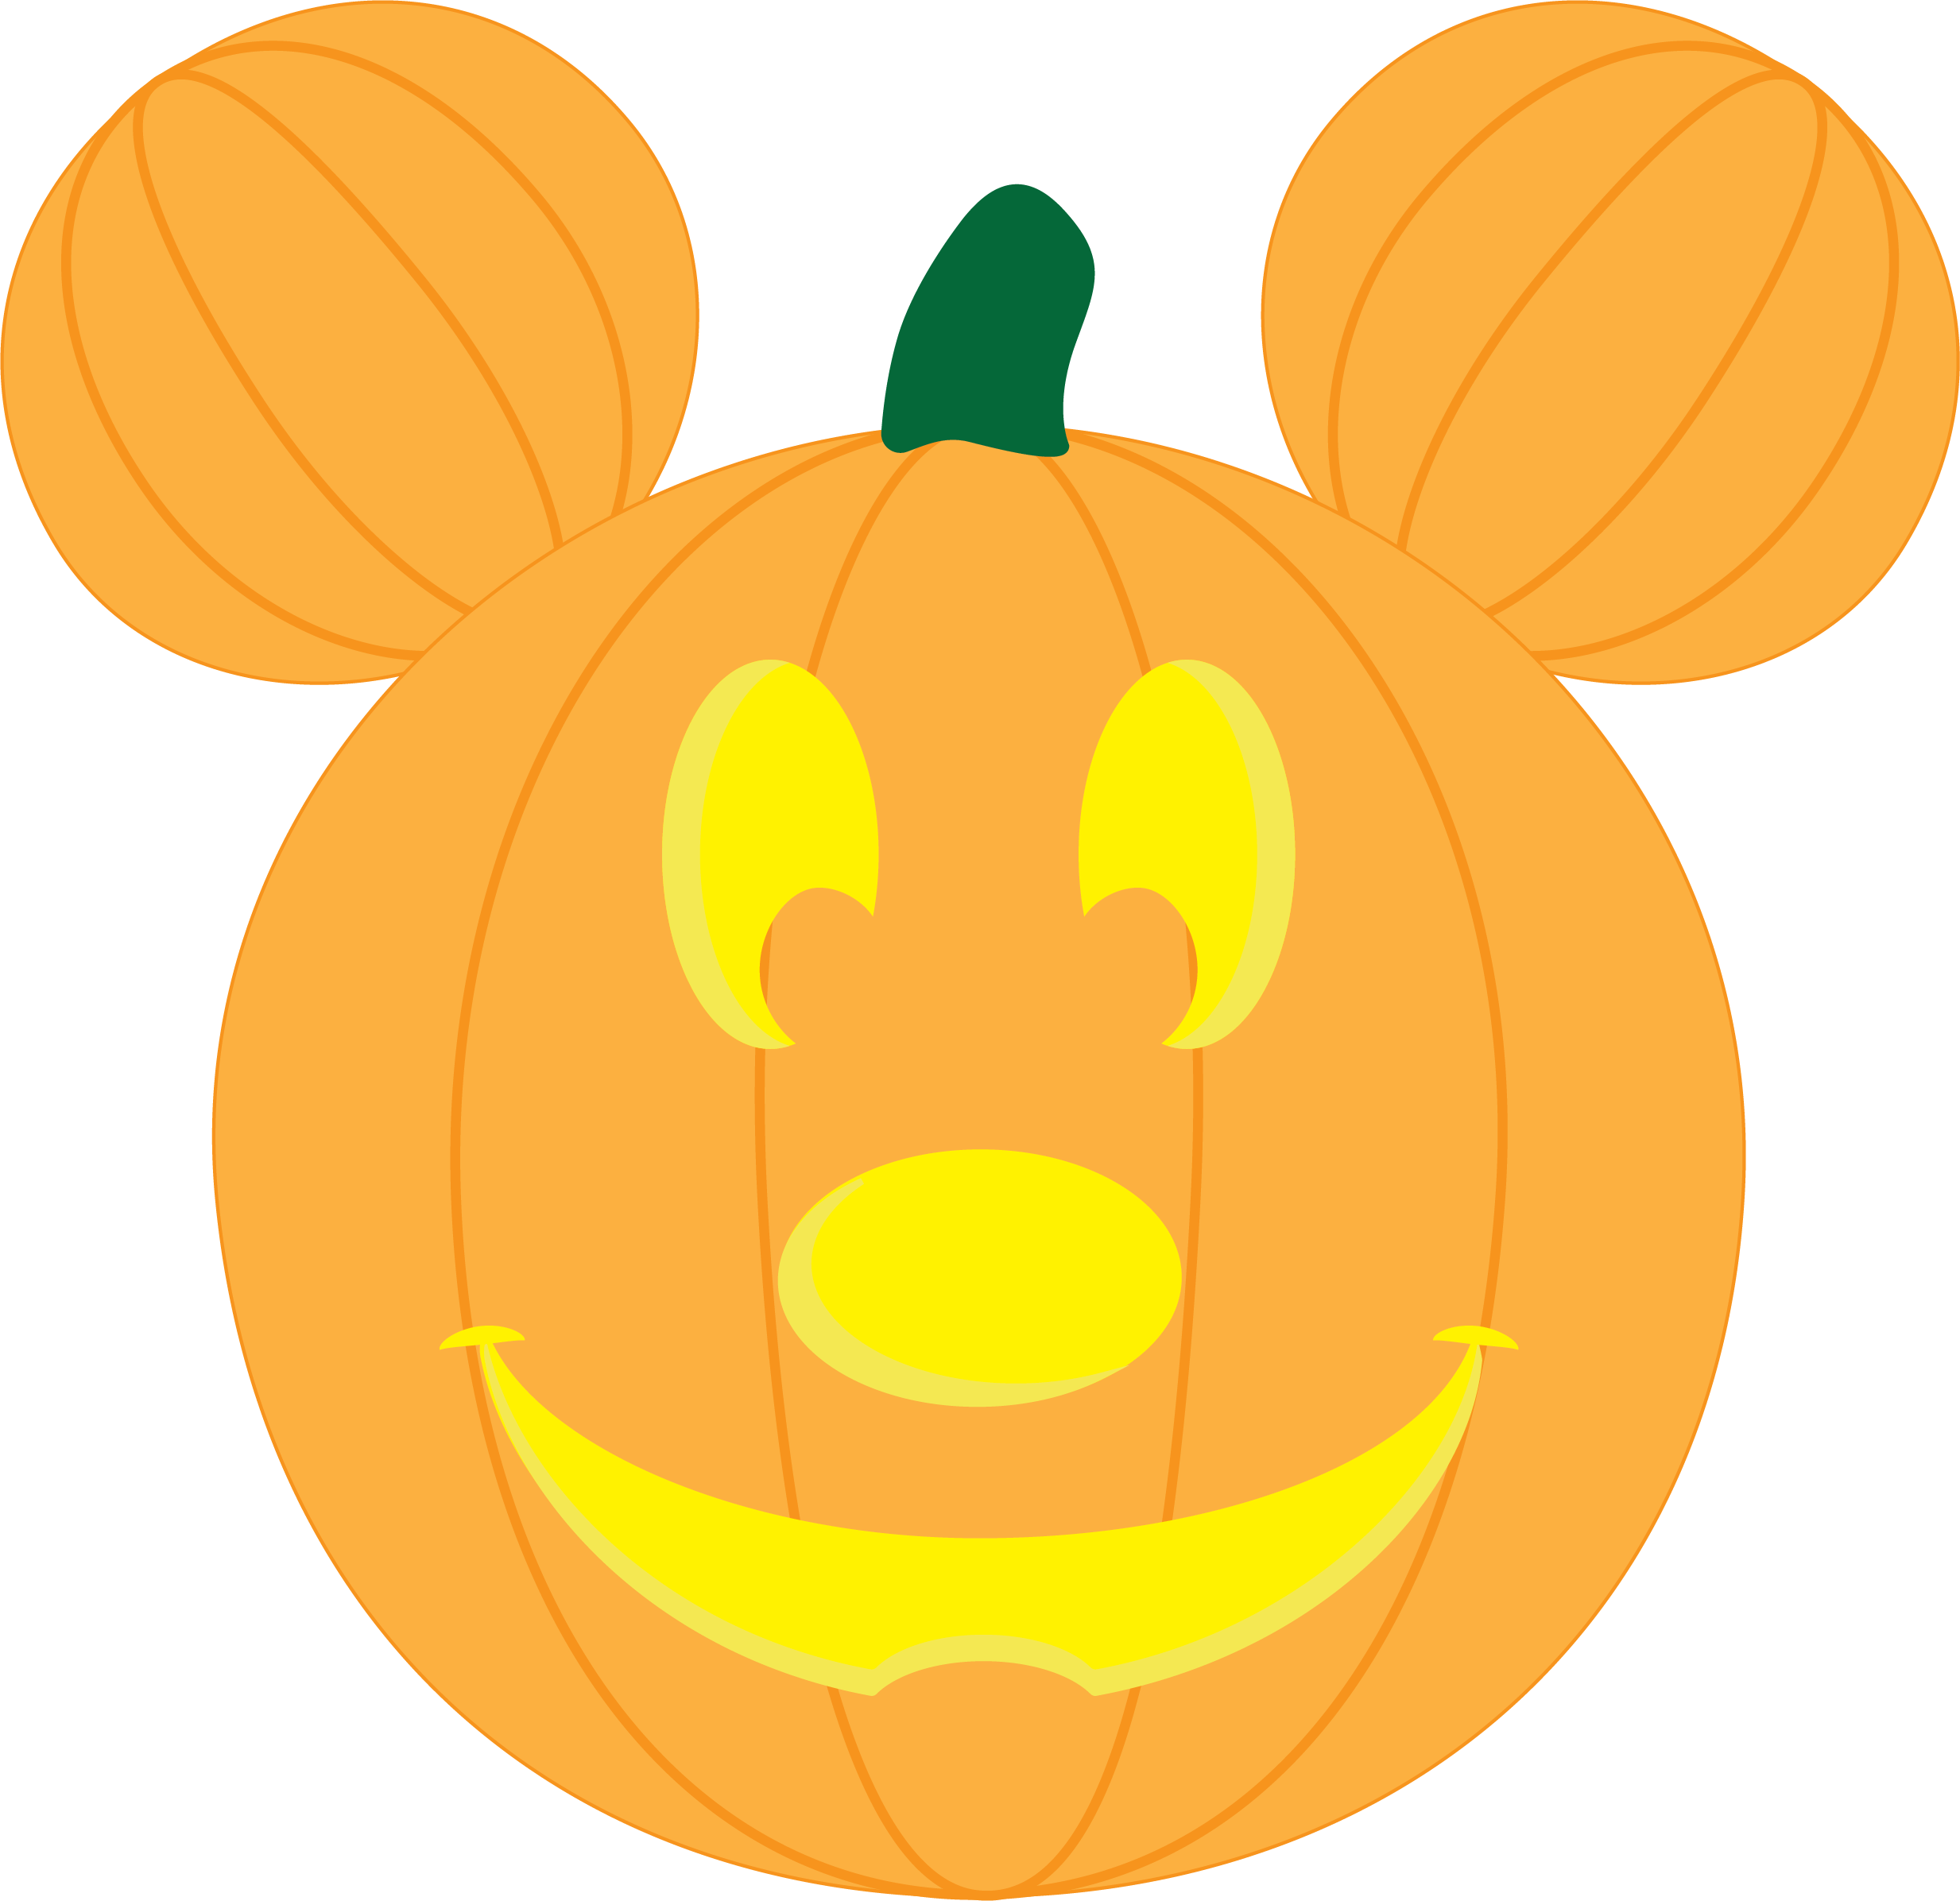 A Cartoon Pumpkin With A Smile